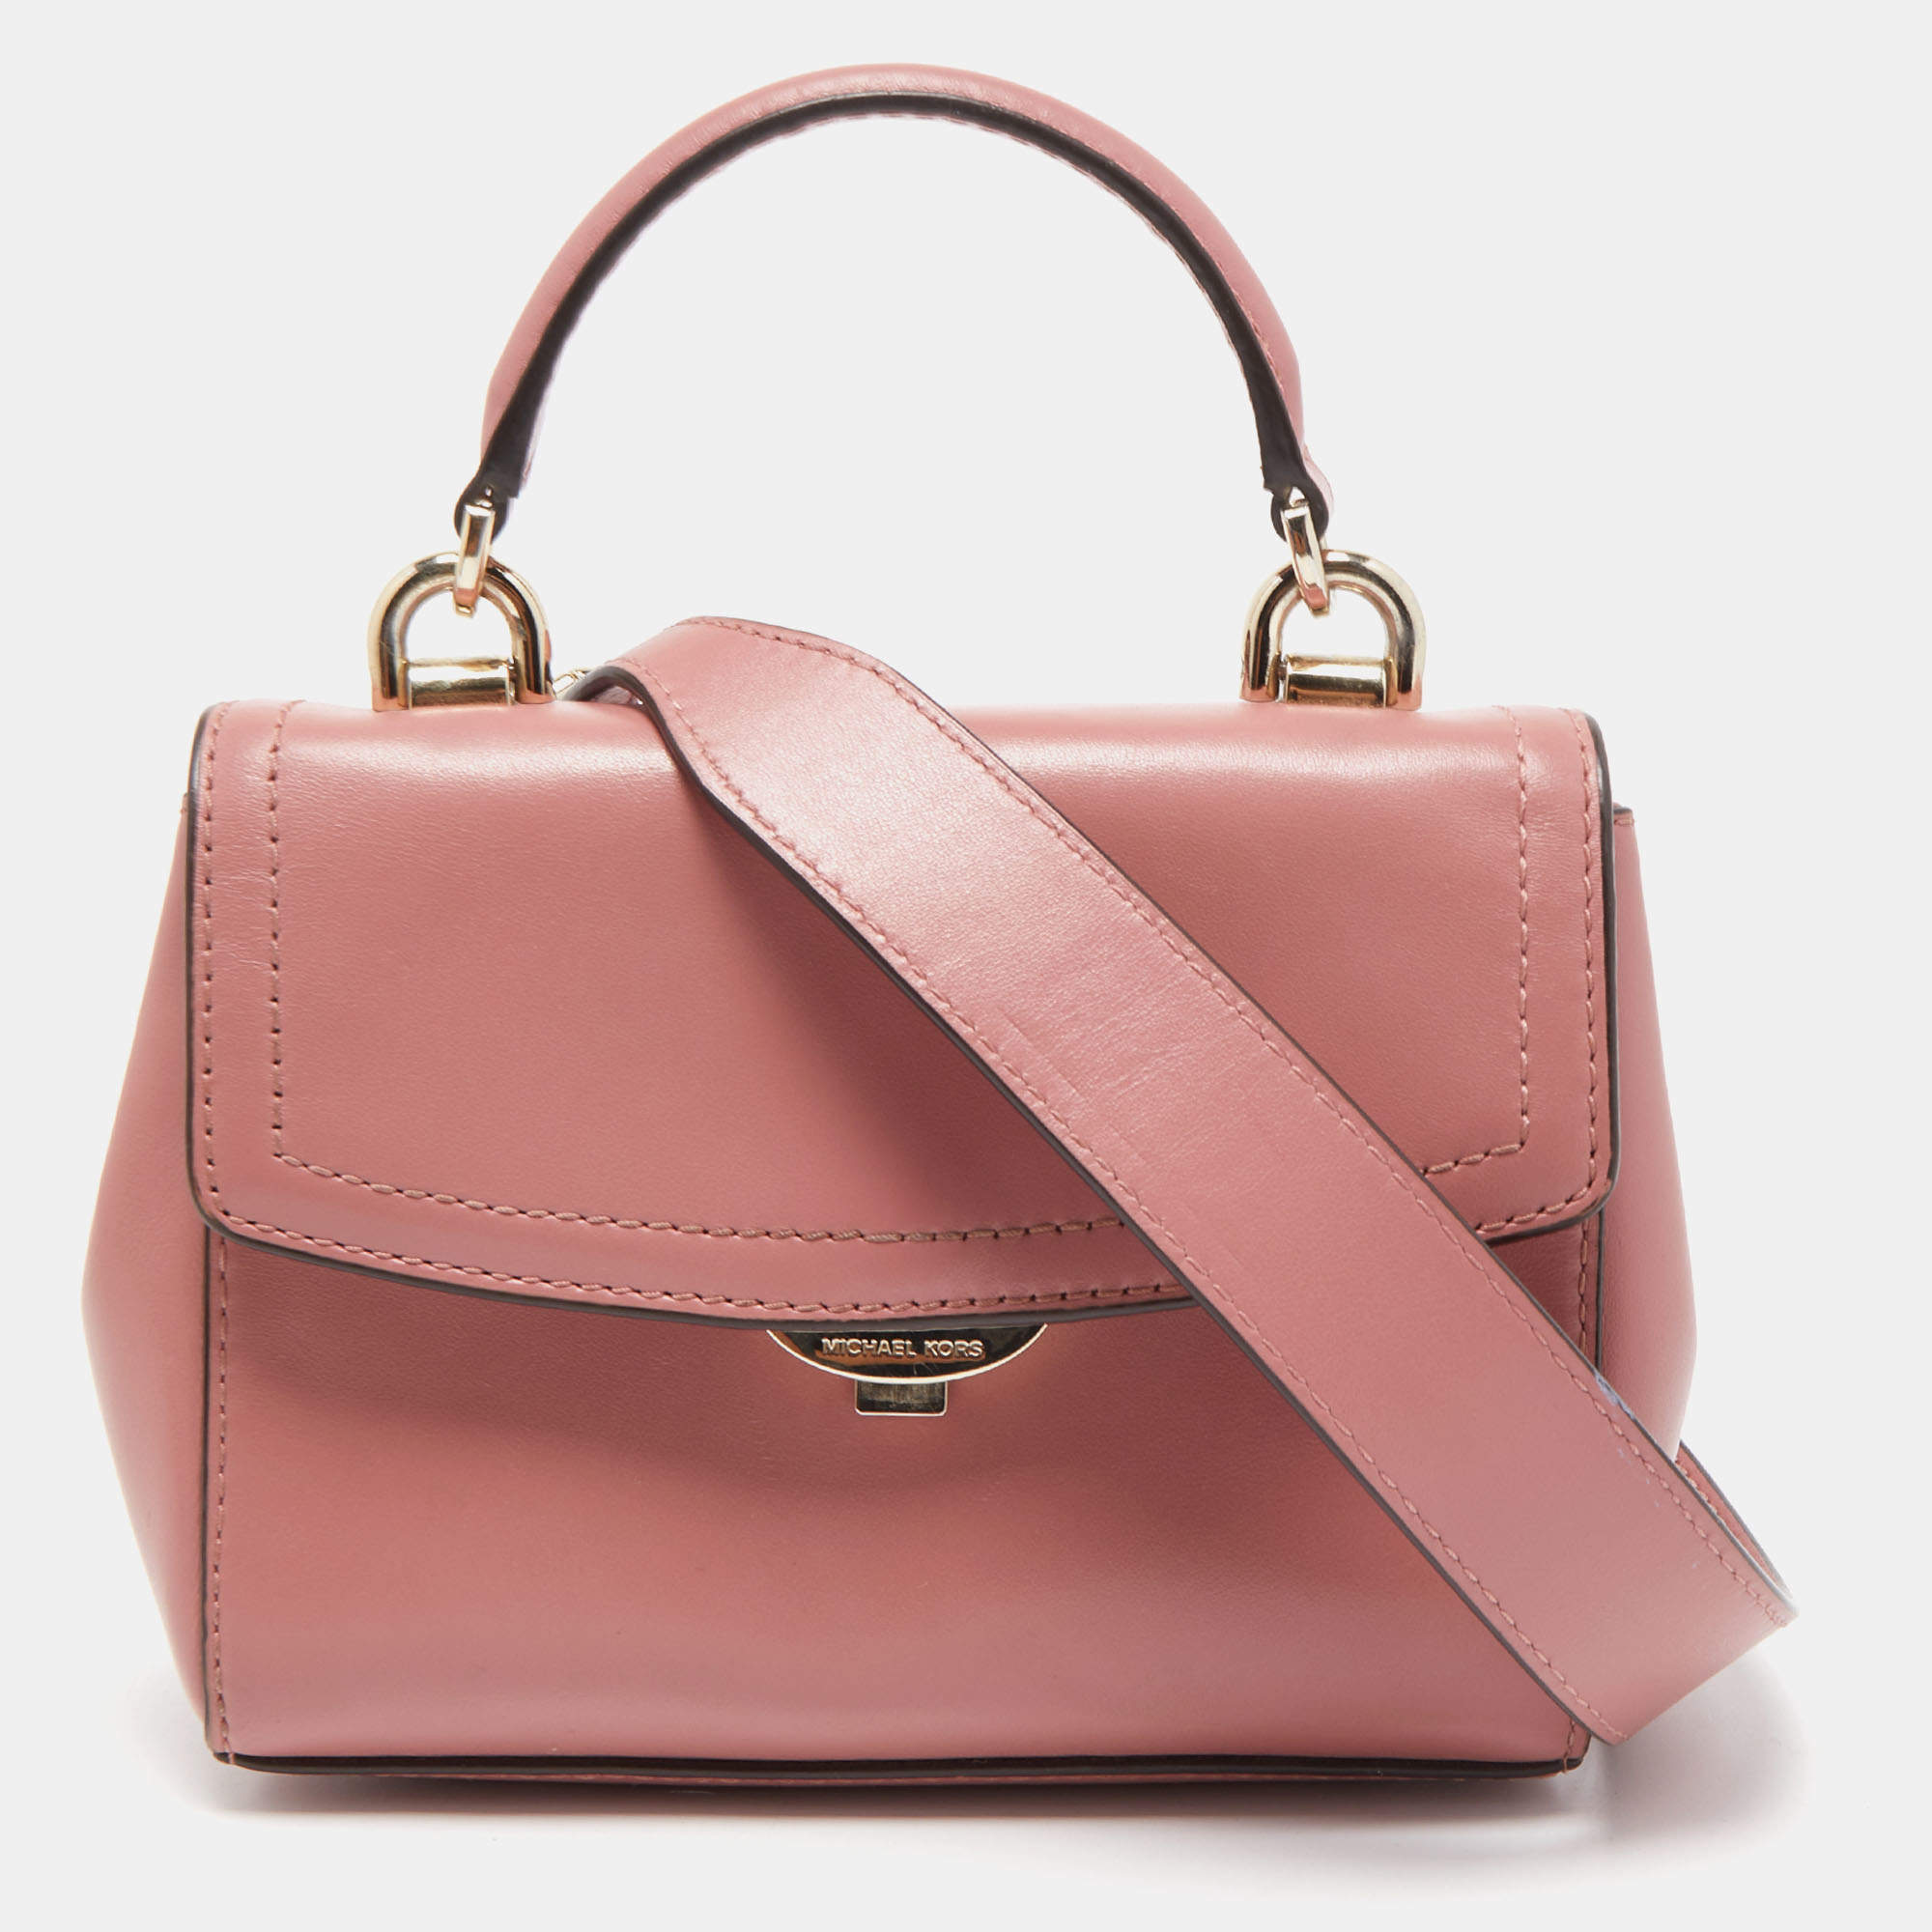 MICHAEL Michael Kors Ava Medium Saffiano Satchel Bag, Light Pink